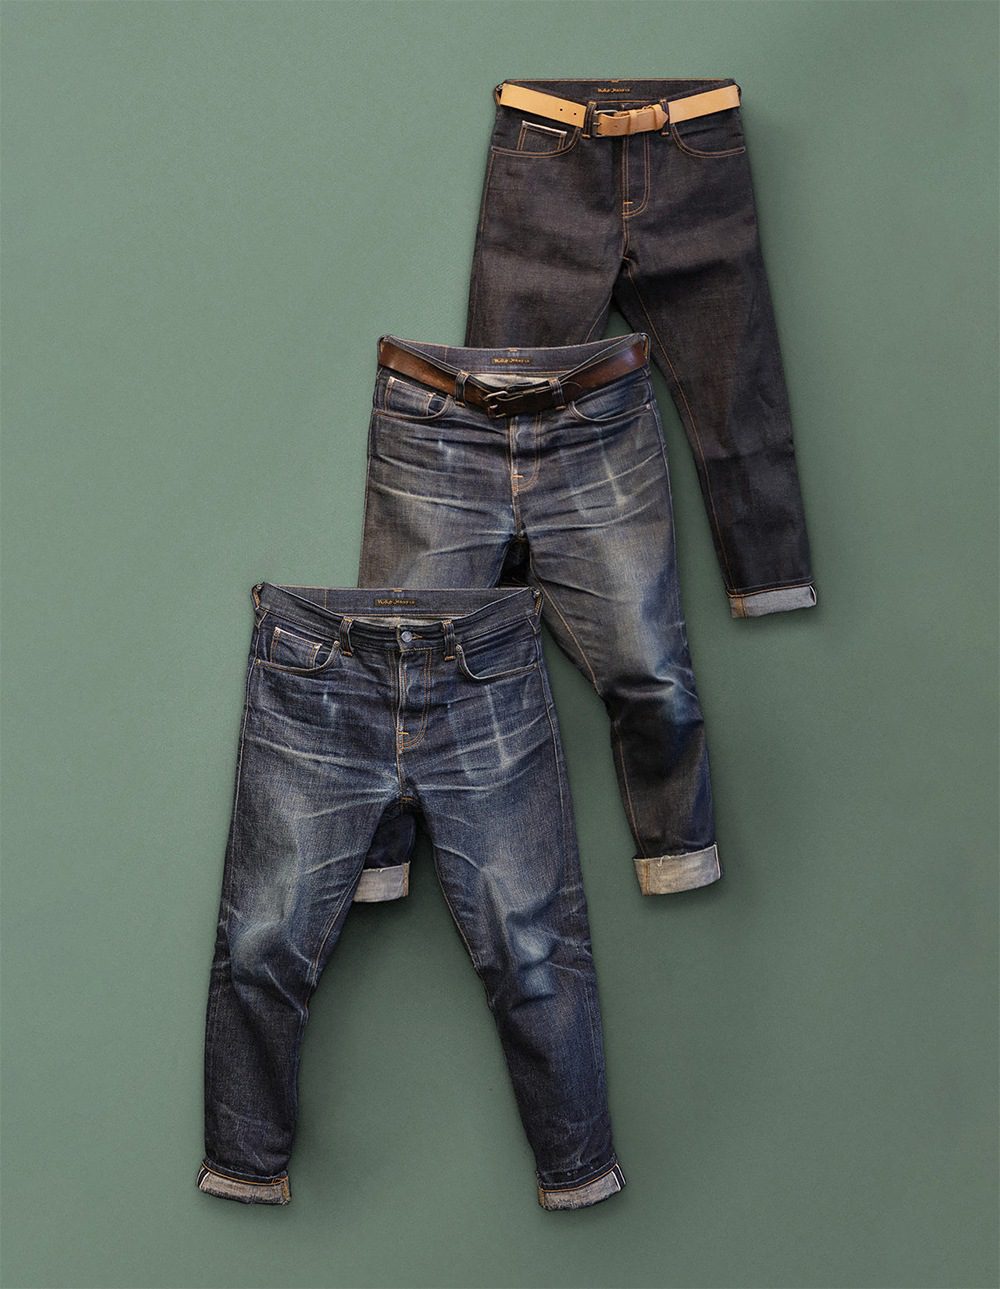 Denim Downsizing: 5 Easy Ways To Shrink Jeans